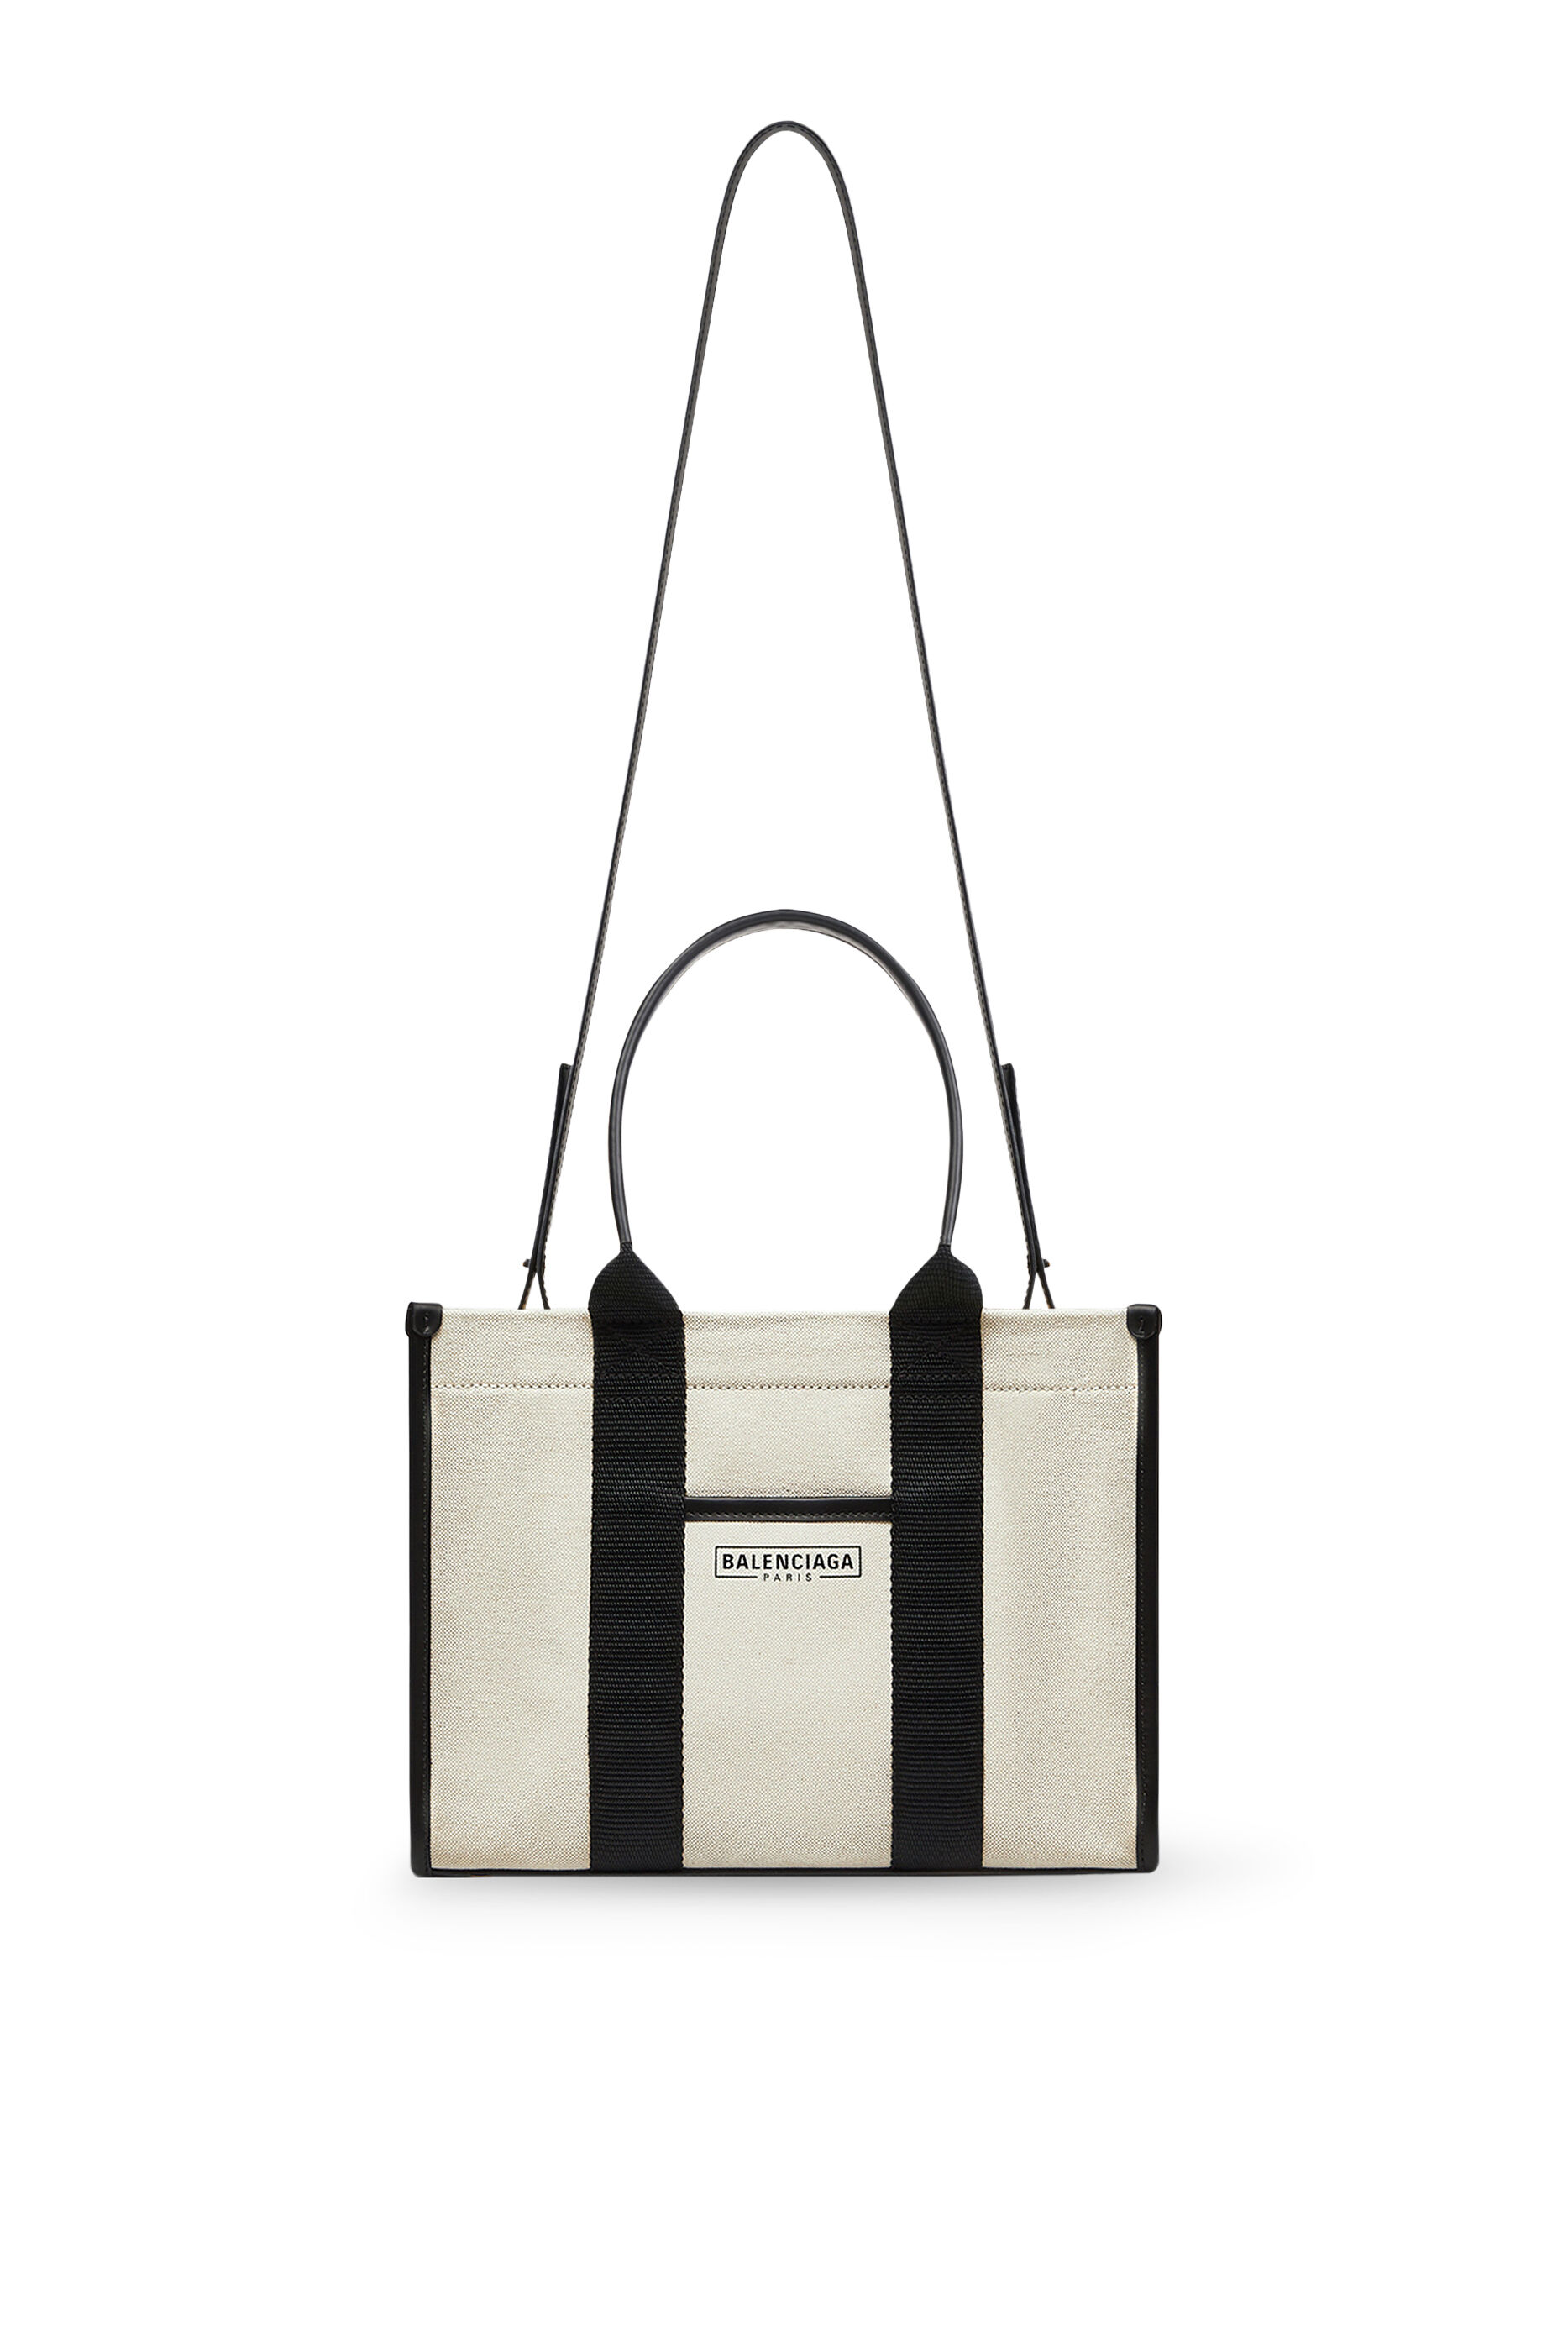 Shop Luxury Balenciaga Bags Online USA | The Luxury Closet